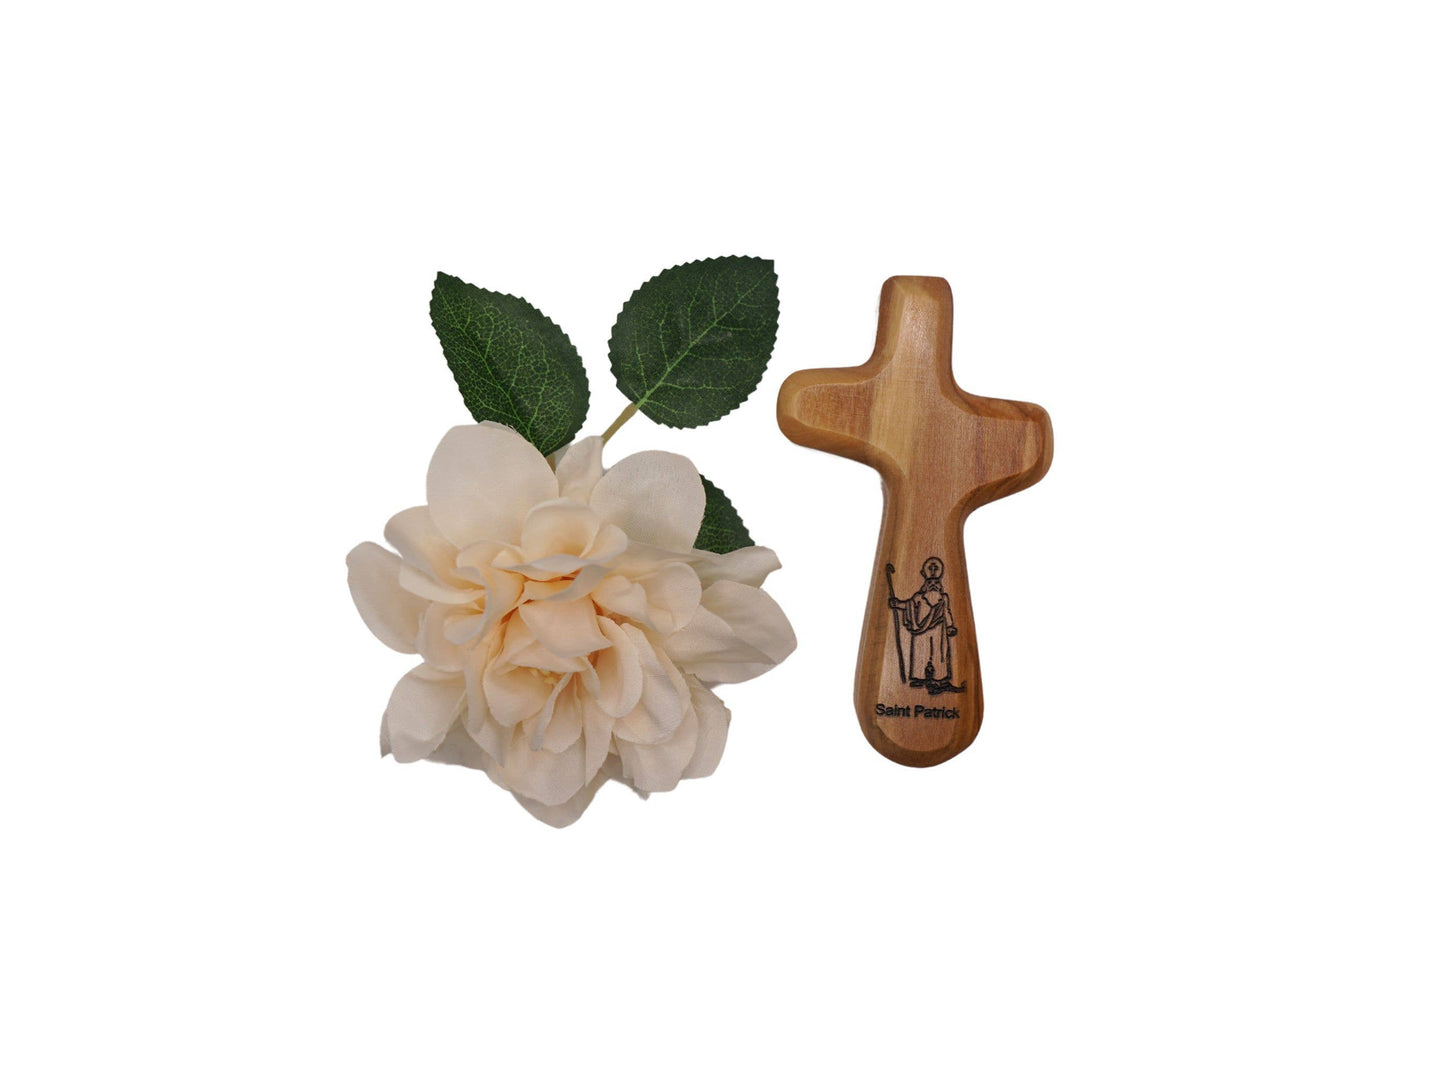 Saint Patrick - Engraved Holding Cross